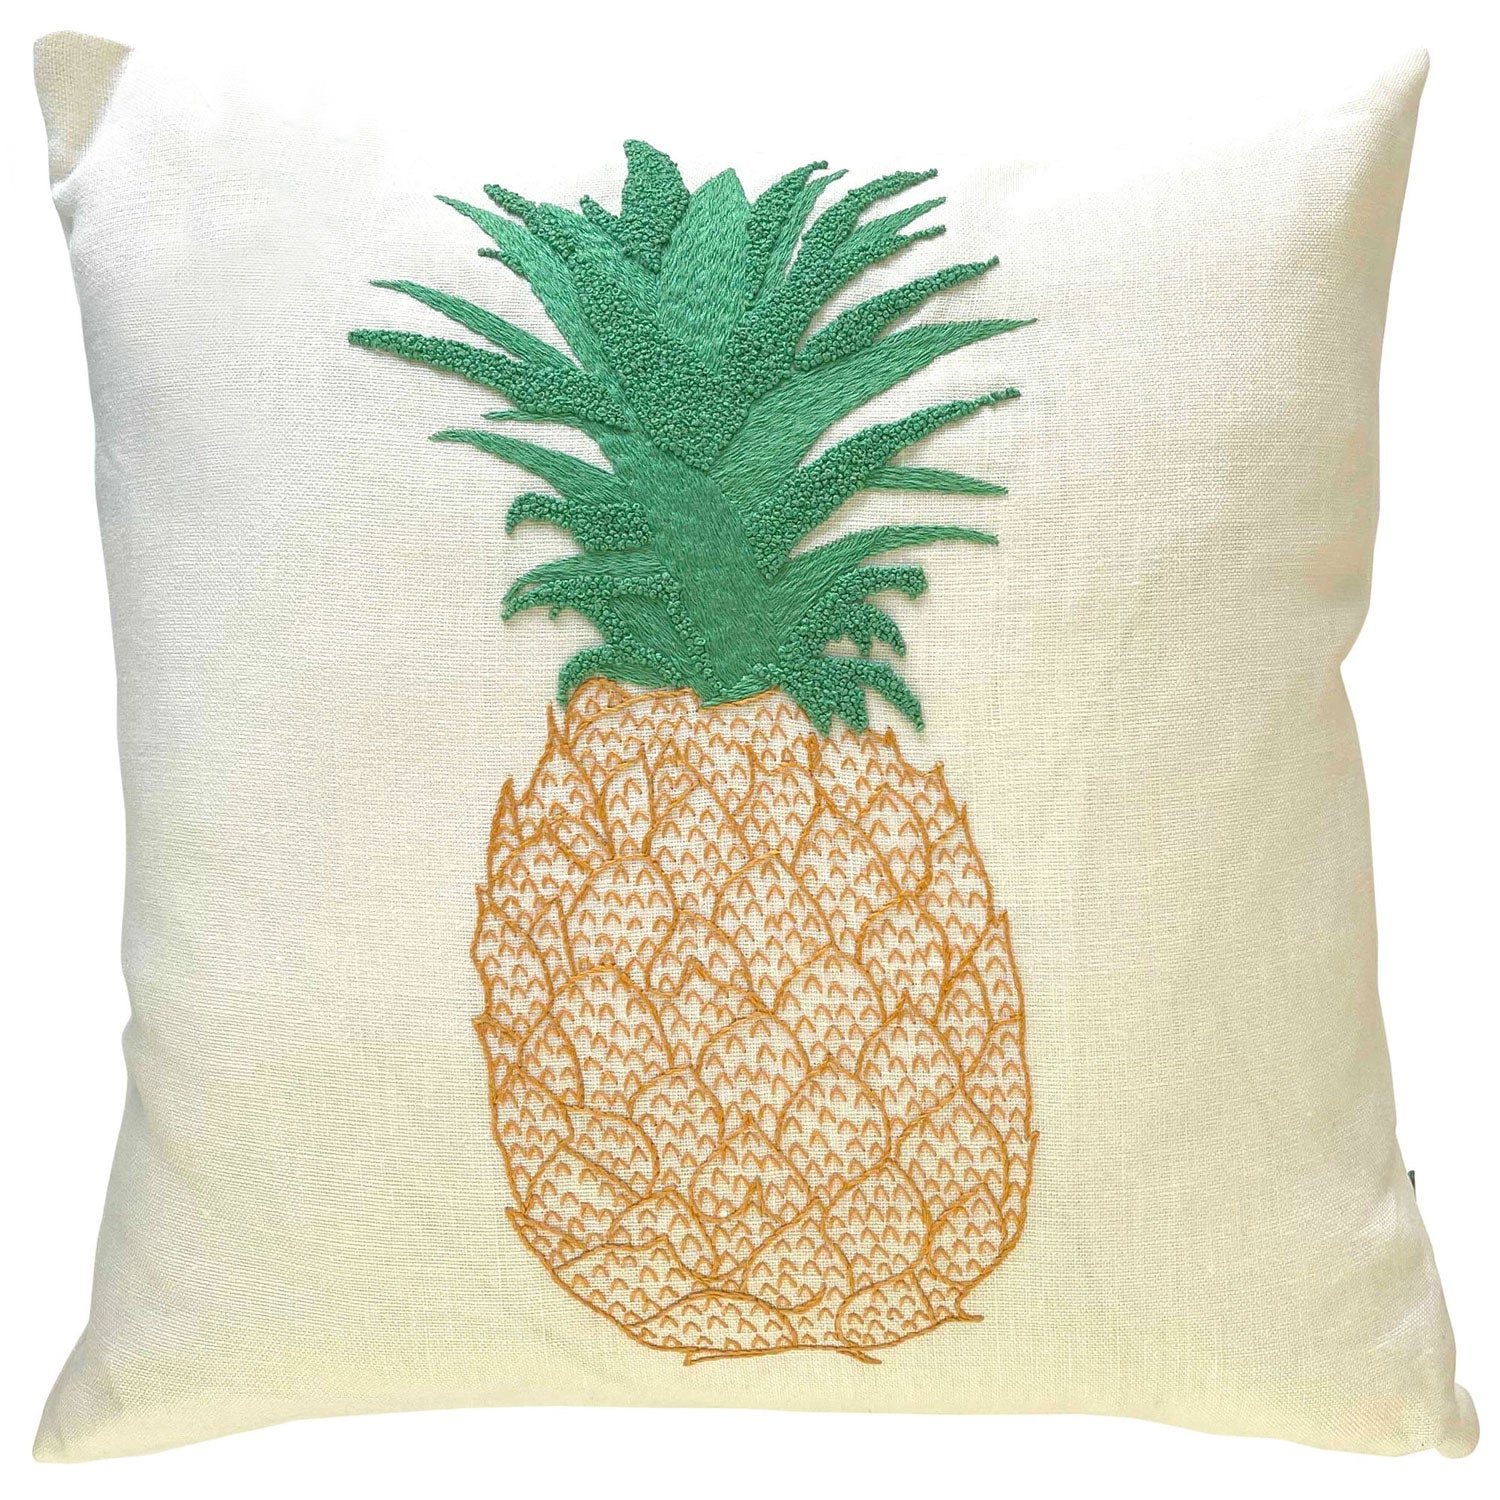 Fine-Cell-Work-Yellow-Green-Hand-Embroidered-Pineapple-Cushion-Melissa-Wyndham.jpg